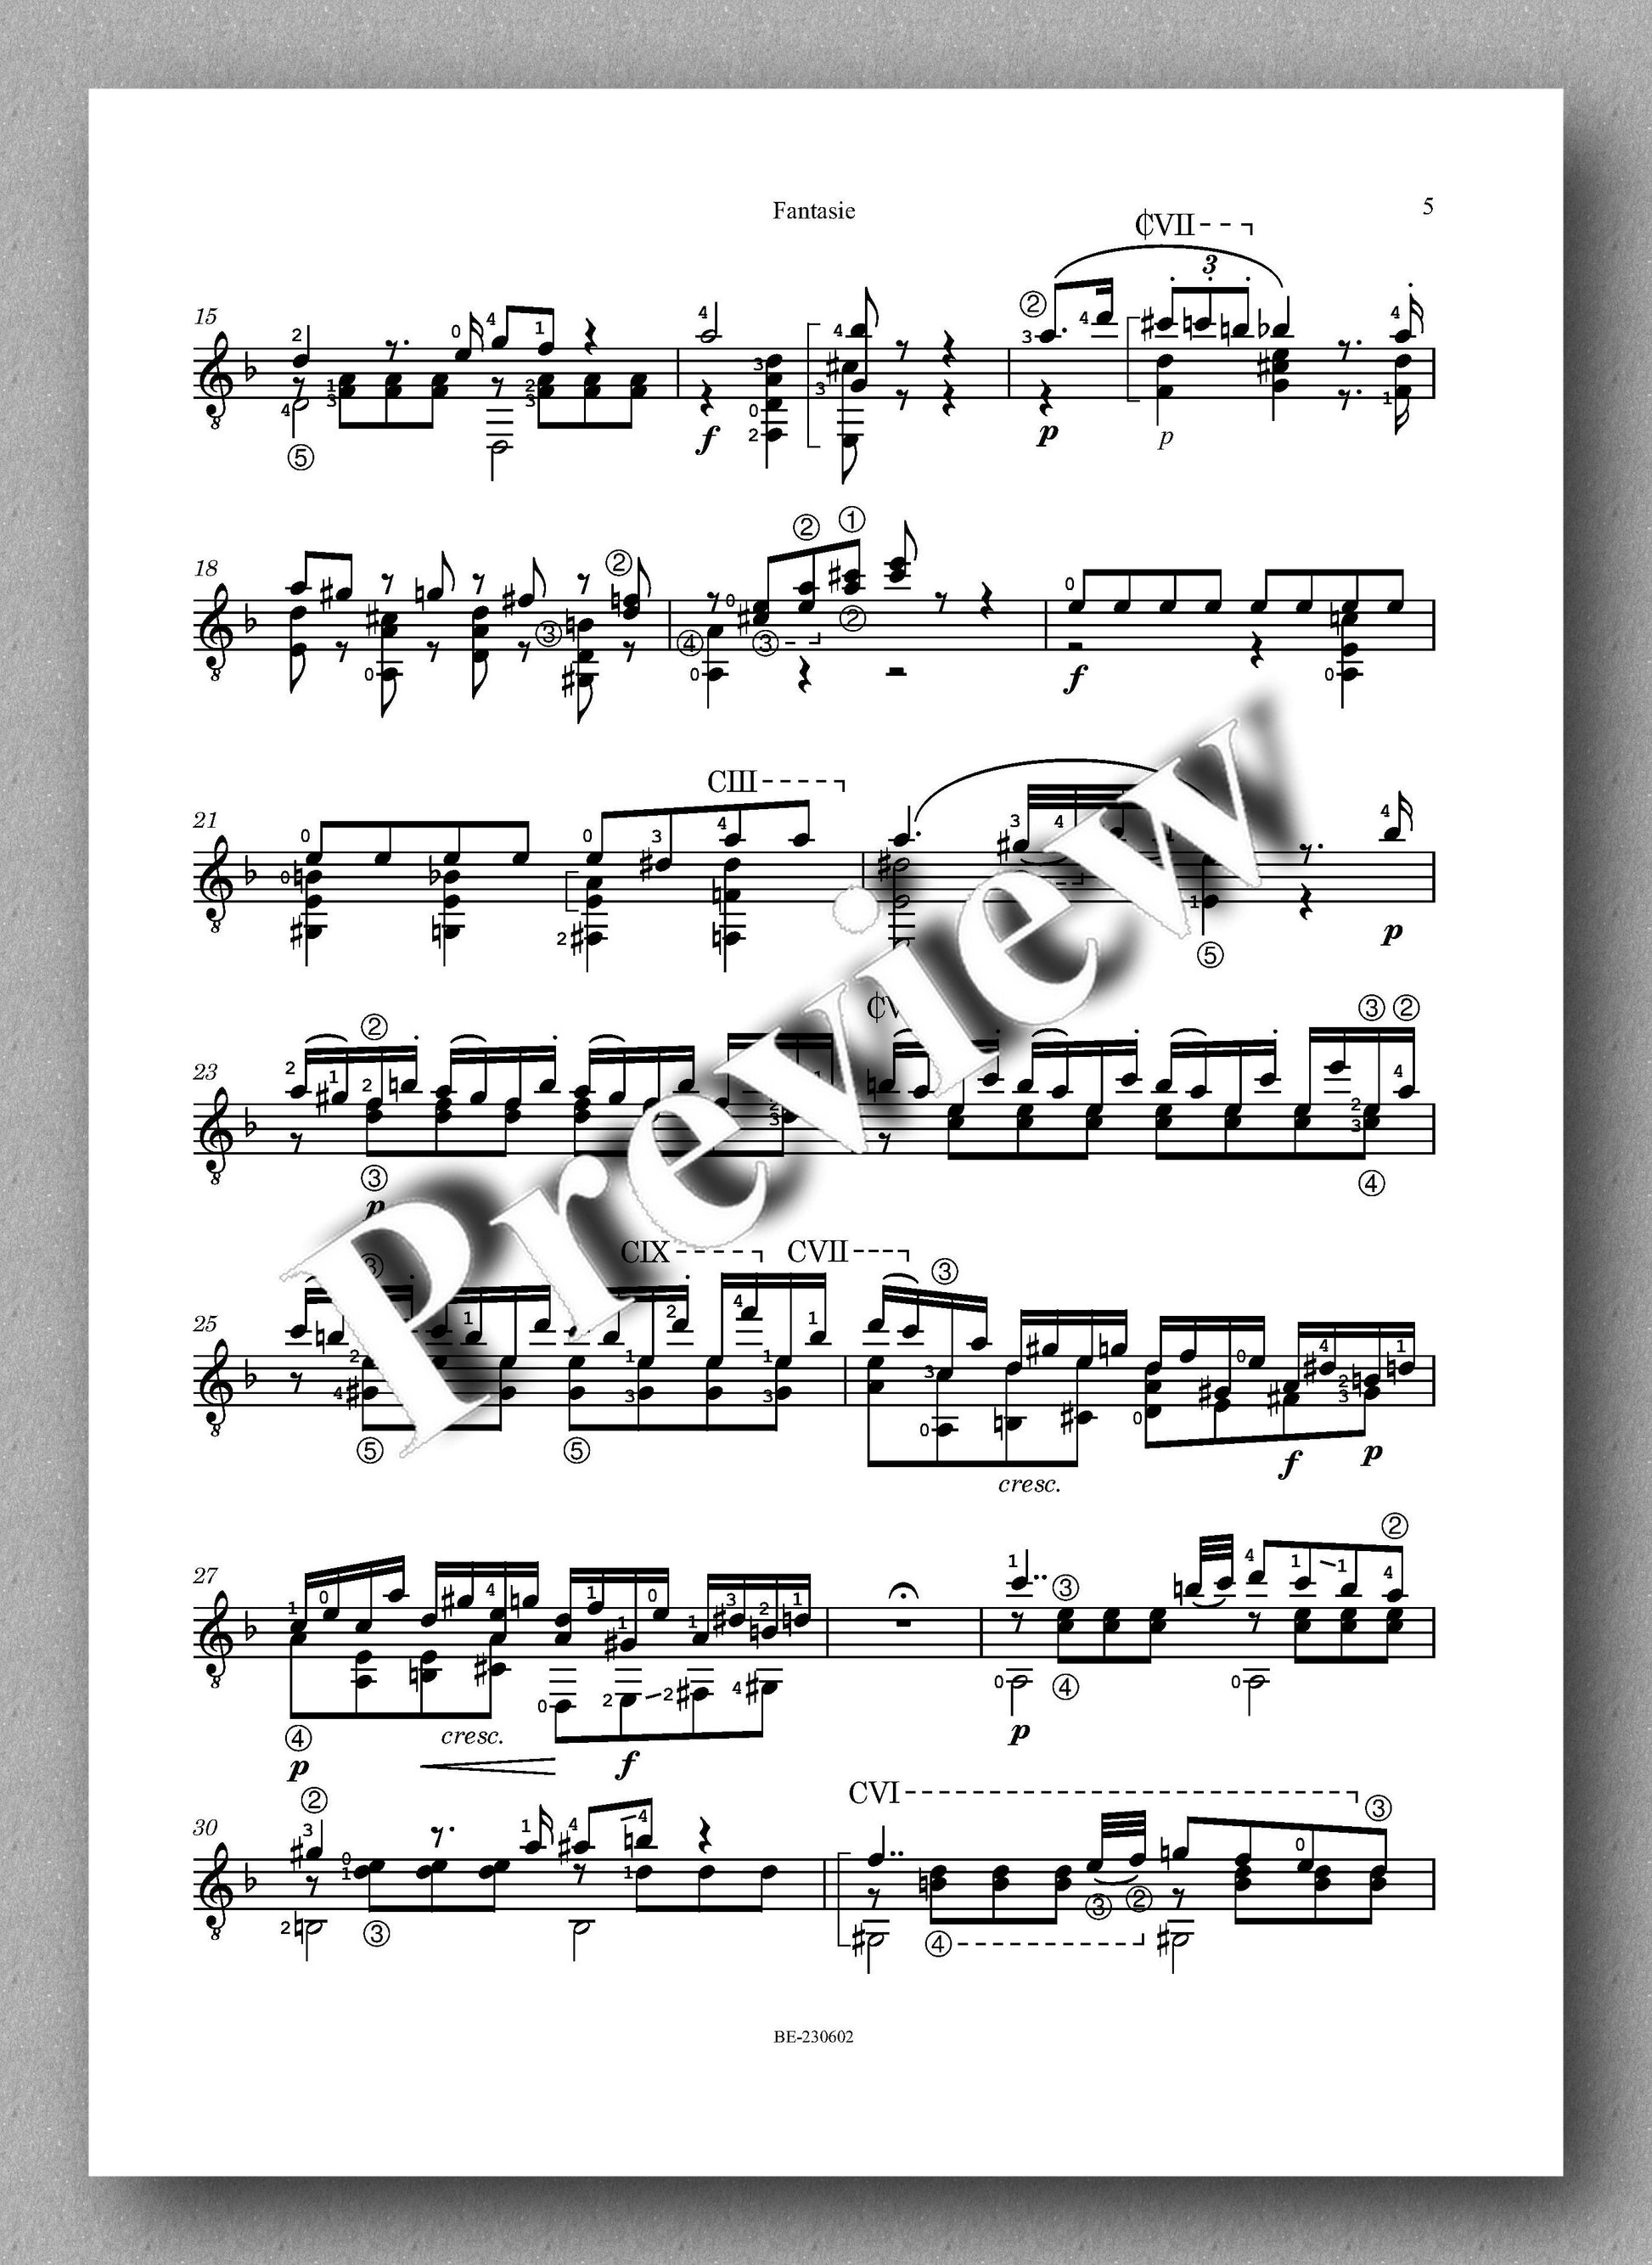 Mozart-Palacios, Fantasie, KV 397 - preview of the music score 2